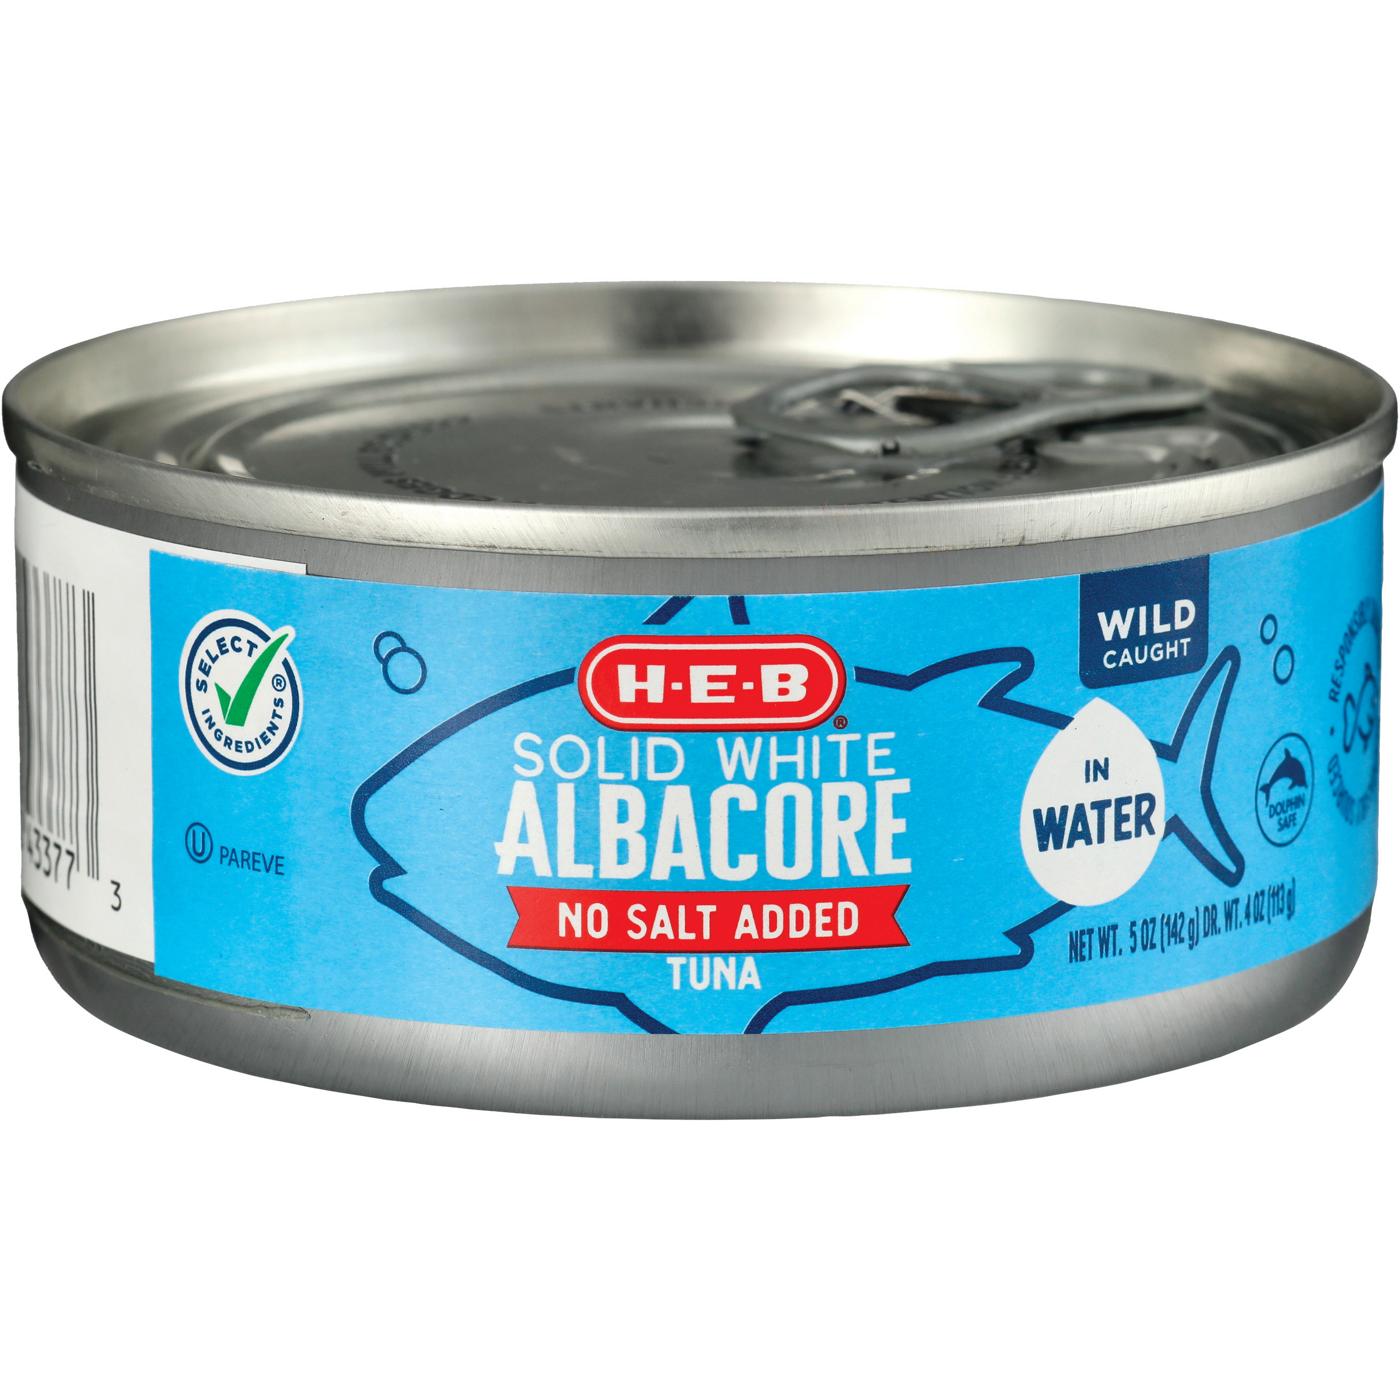 H-E-B Solid White Albacore Tuna - No Salt Added; image 1 of 2